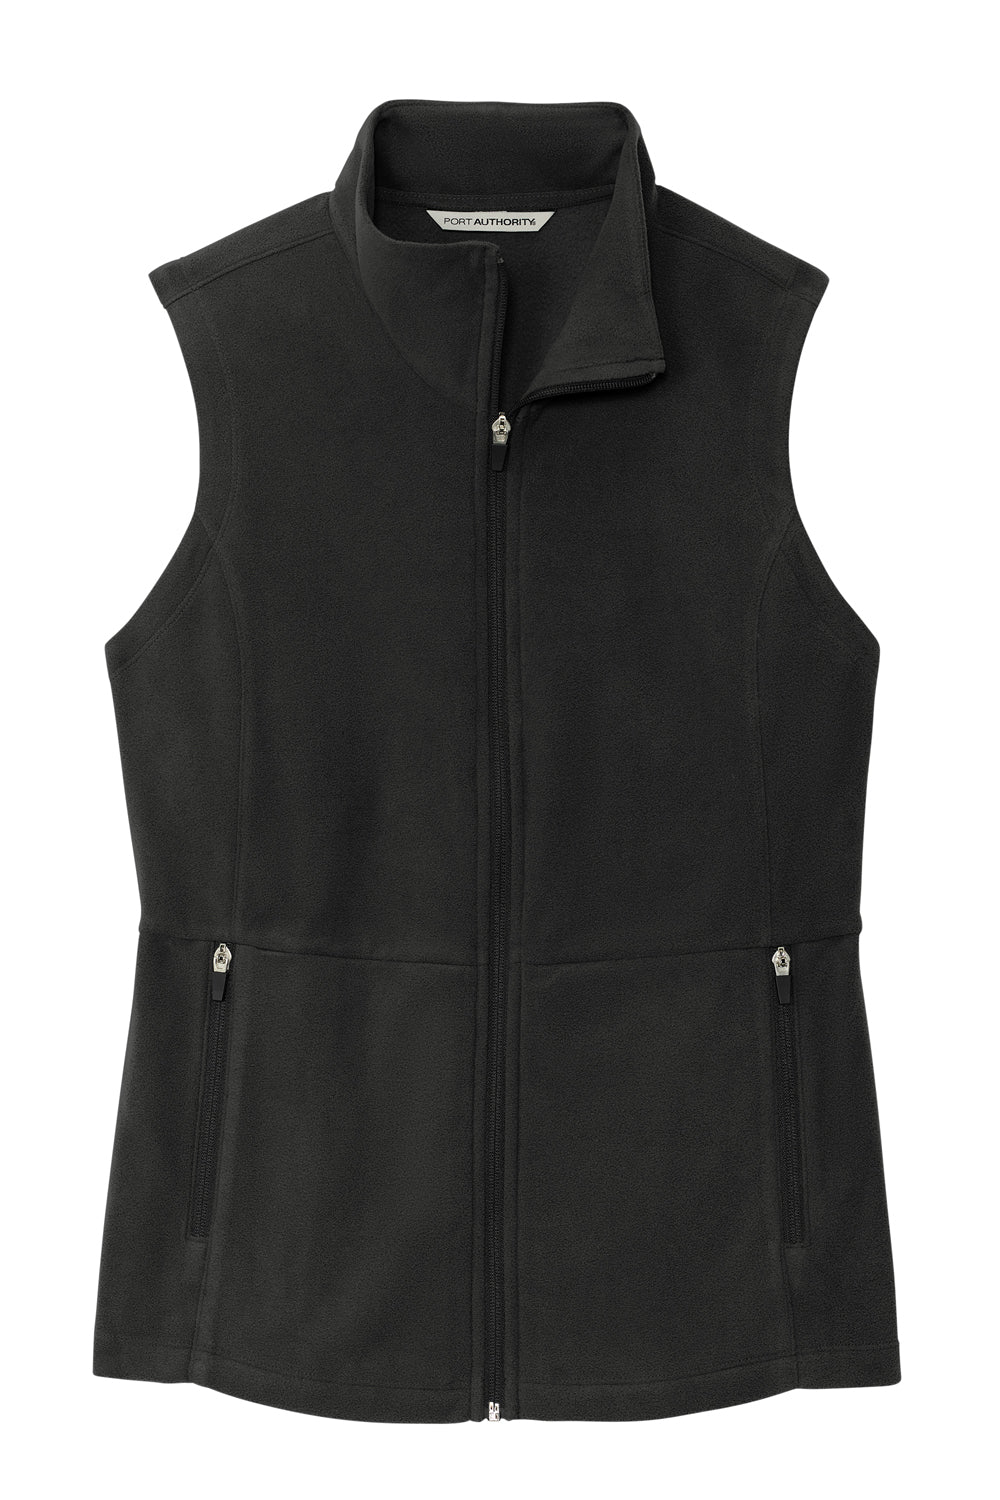 Port Authority L152 Womens Accord Microfleece Full Zip Vest Black Flat Front